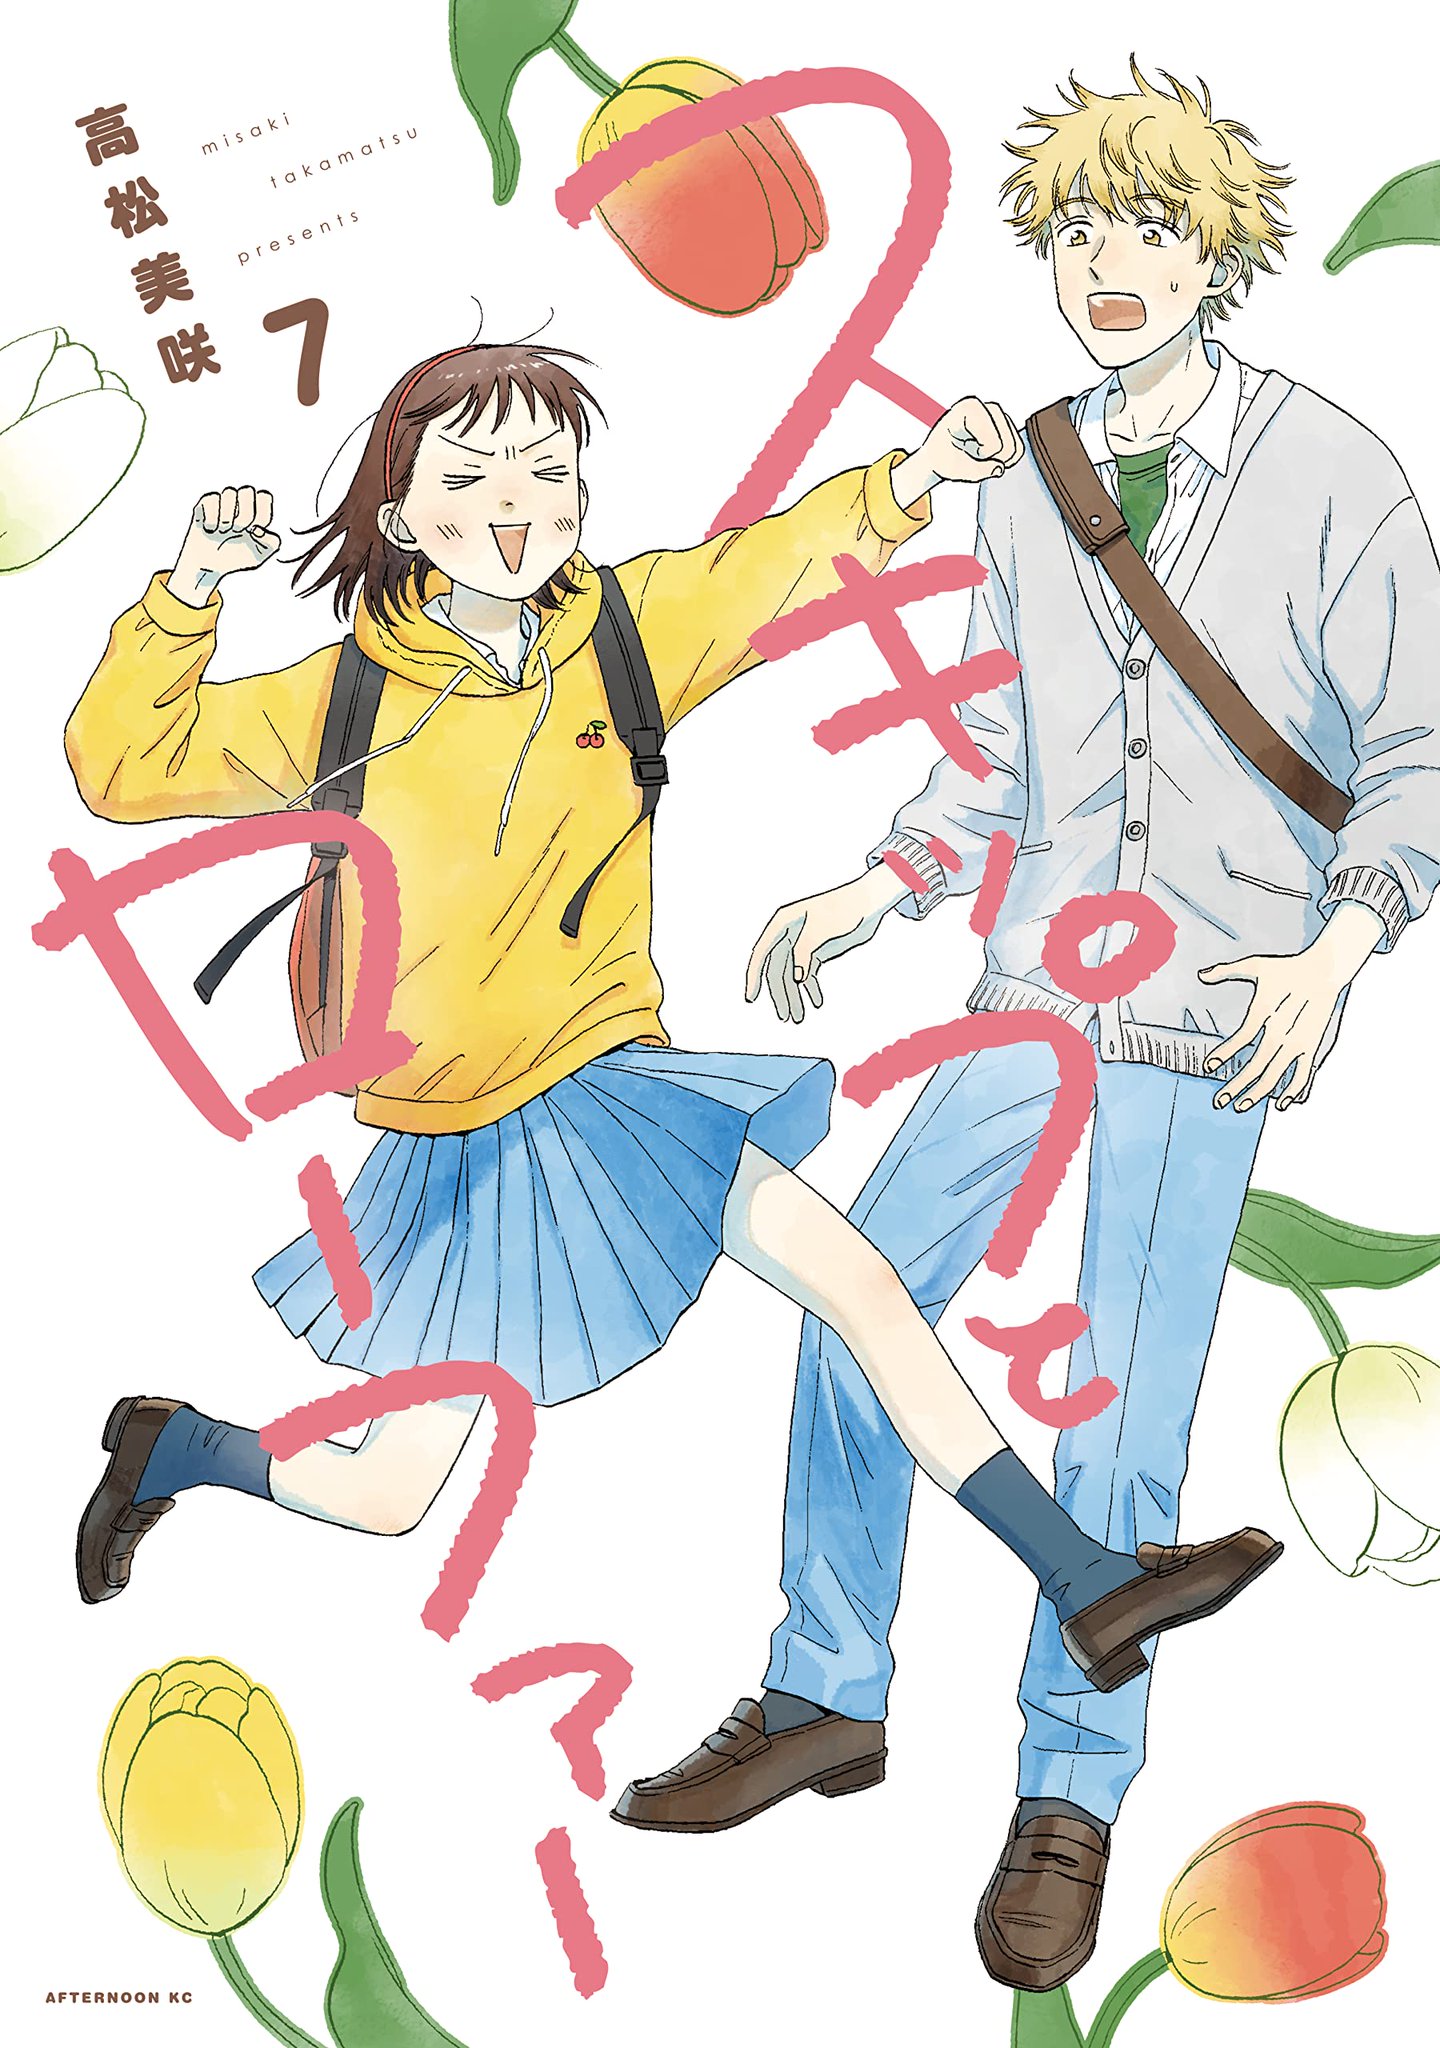 Manga Mogura RE on X: Skip to Loafer vol 6 by Misaki Takamatsu